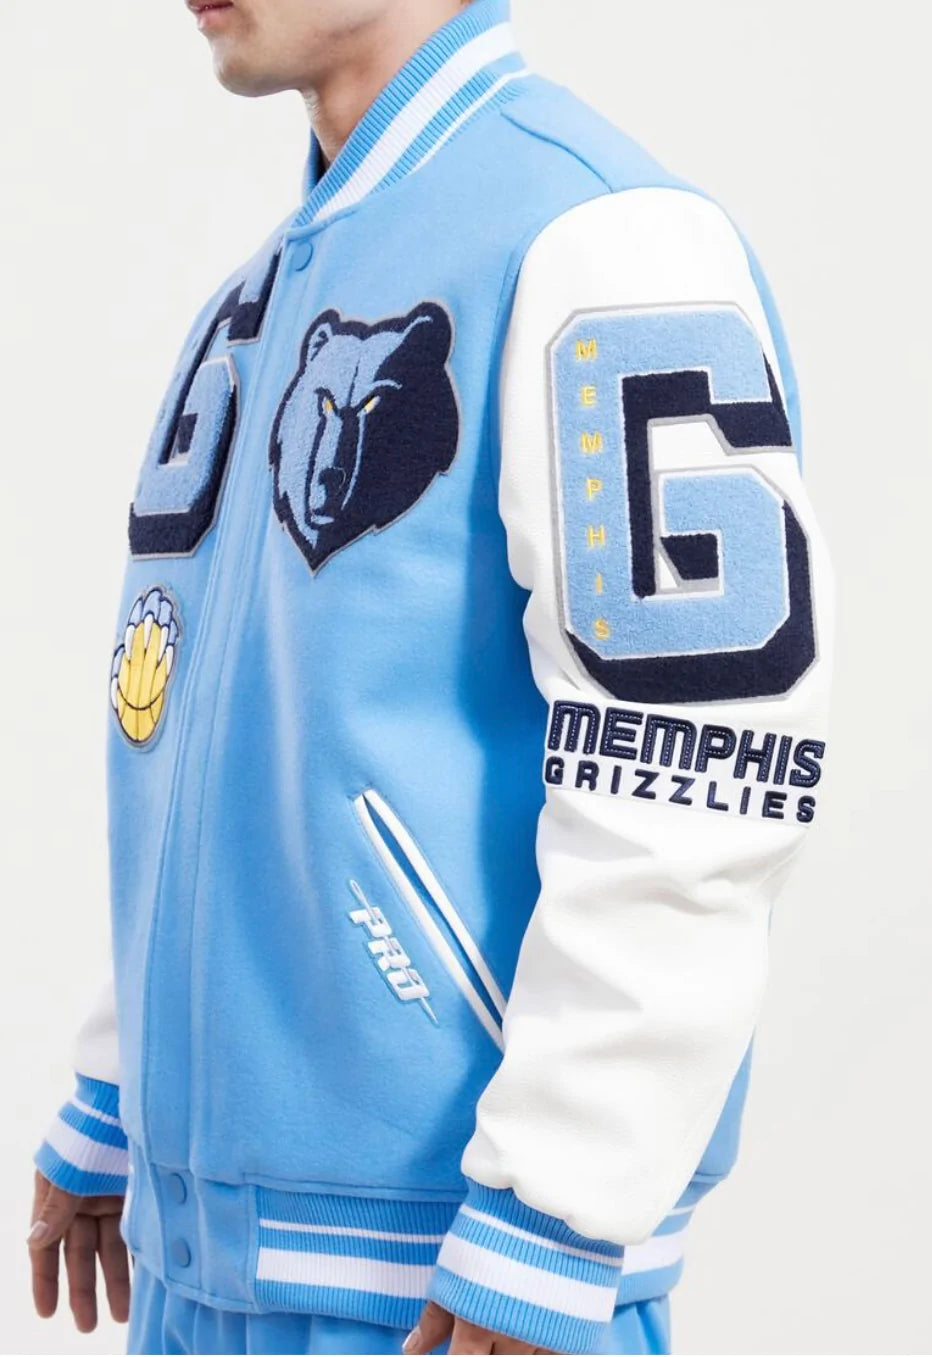 Memphis Grizzlies Poly Twill Varsity Jacket - Gray/Black